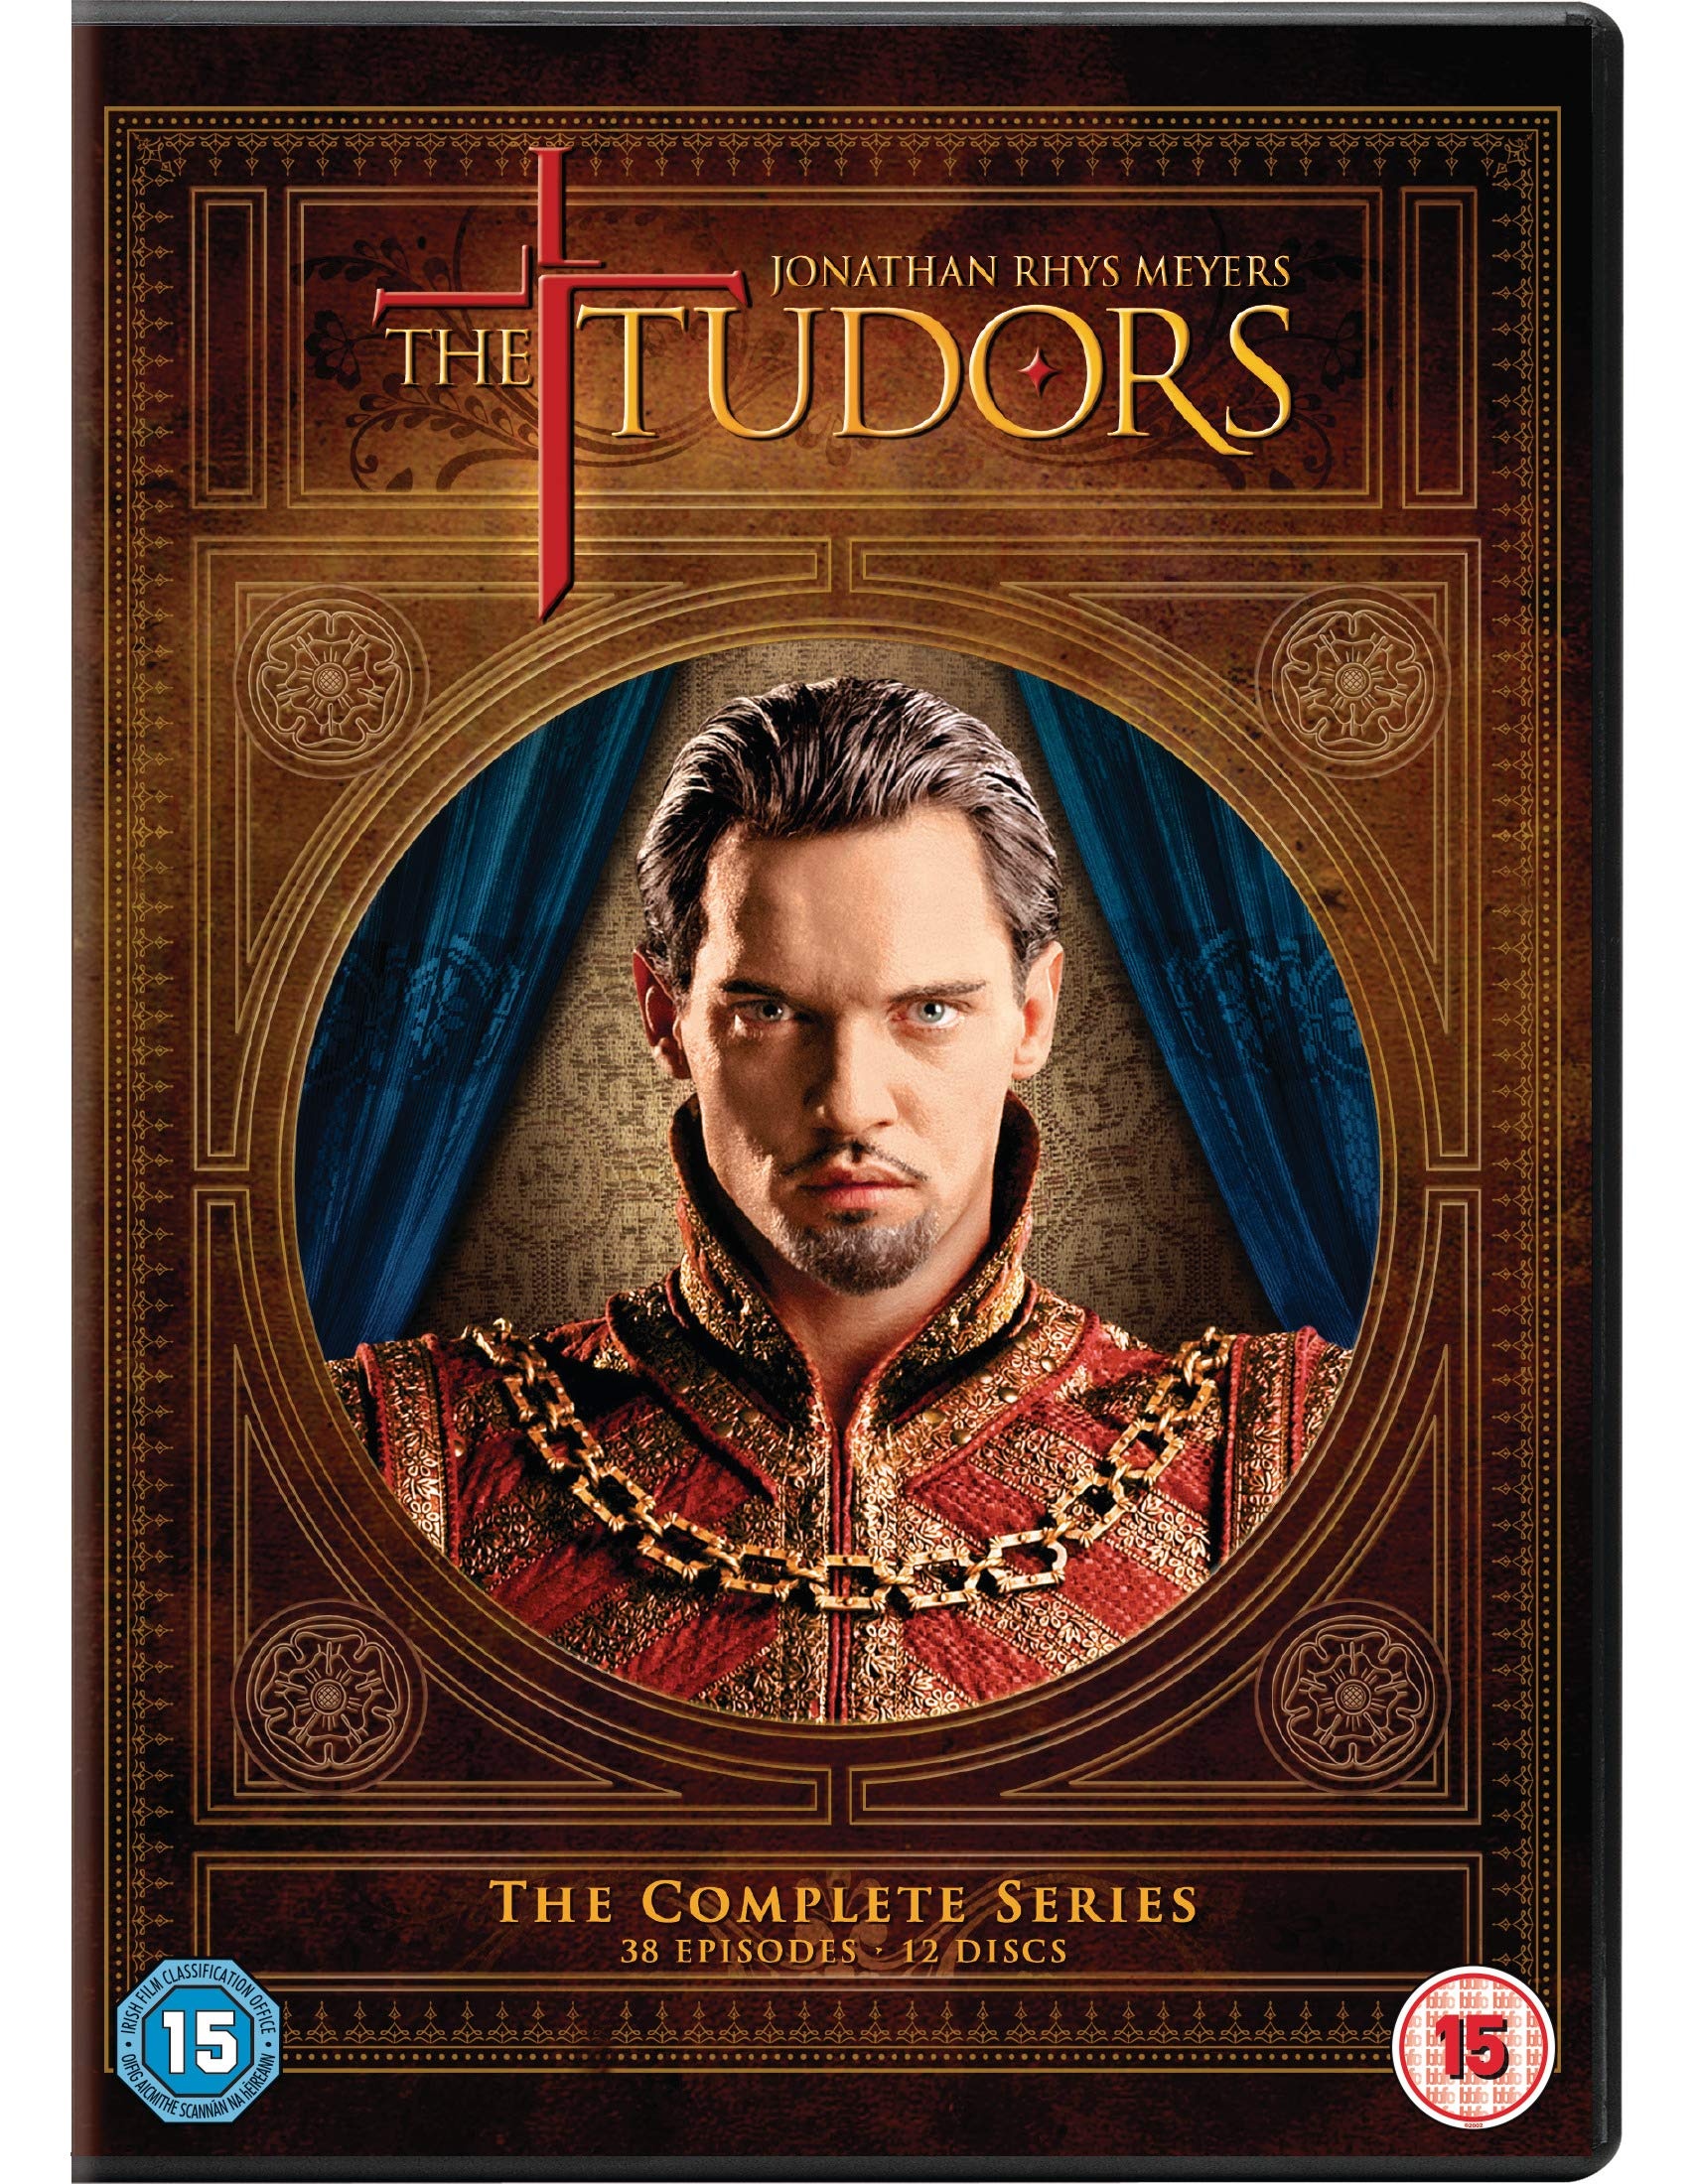 The Tudors - Season 1 / Tudors - Season 2 / Tudors - Season 3 / Tudors - Season 4 - Set [12 DVDs] [UK Import]